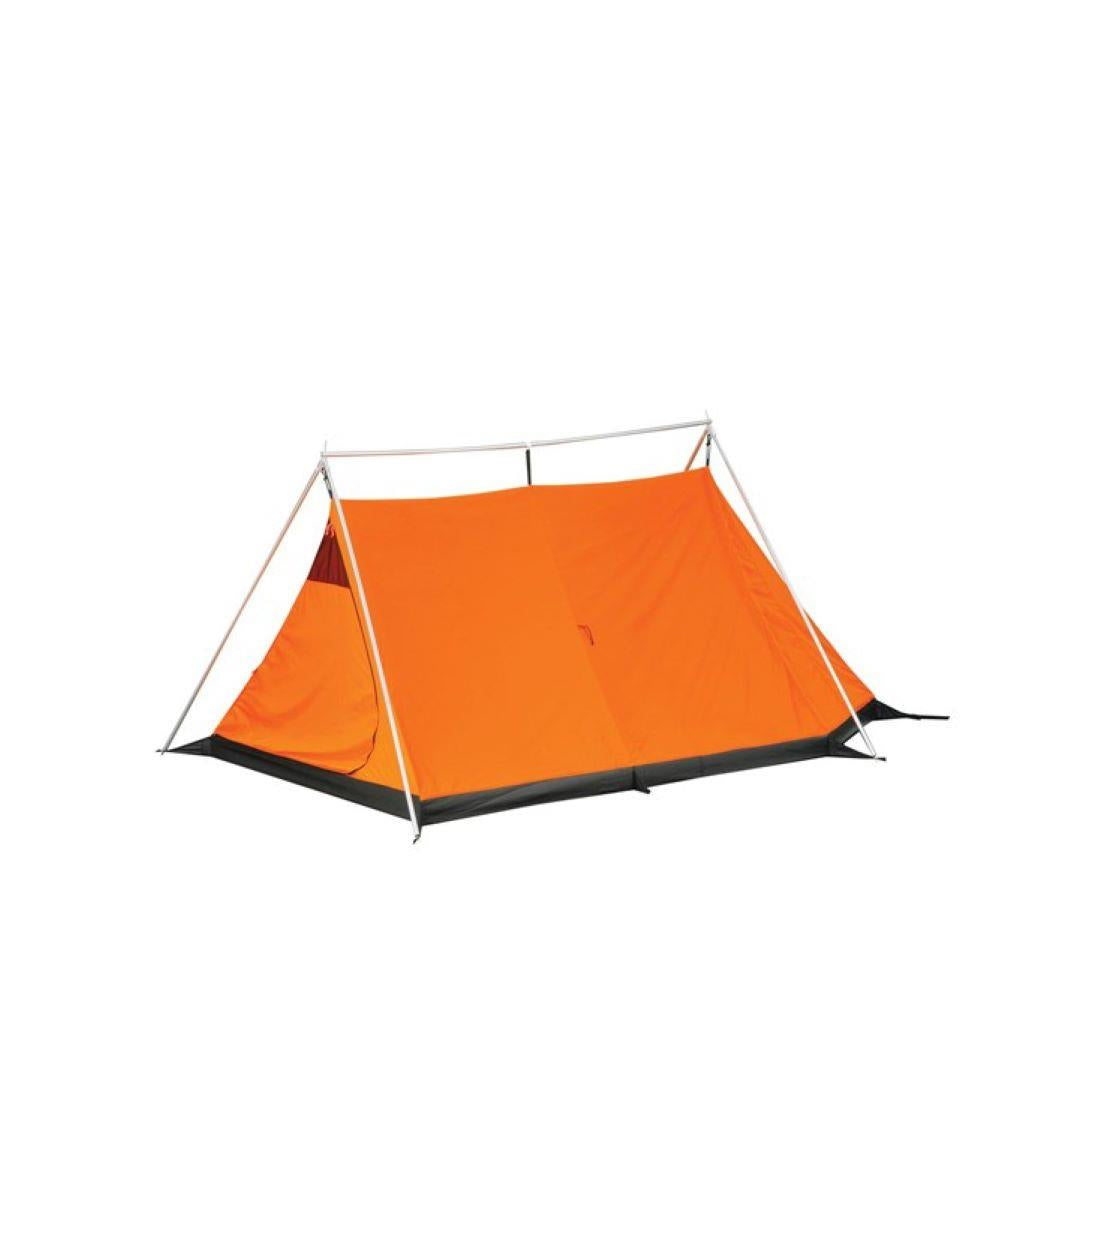 Force Ten Classic Standard Mk 4 Tent - 3 Person Tent